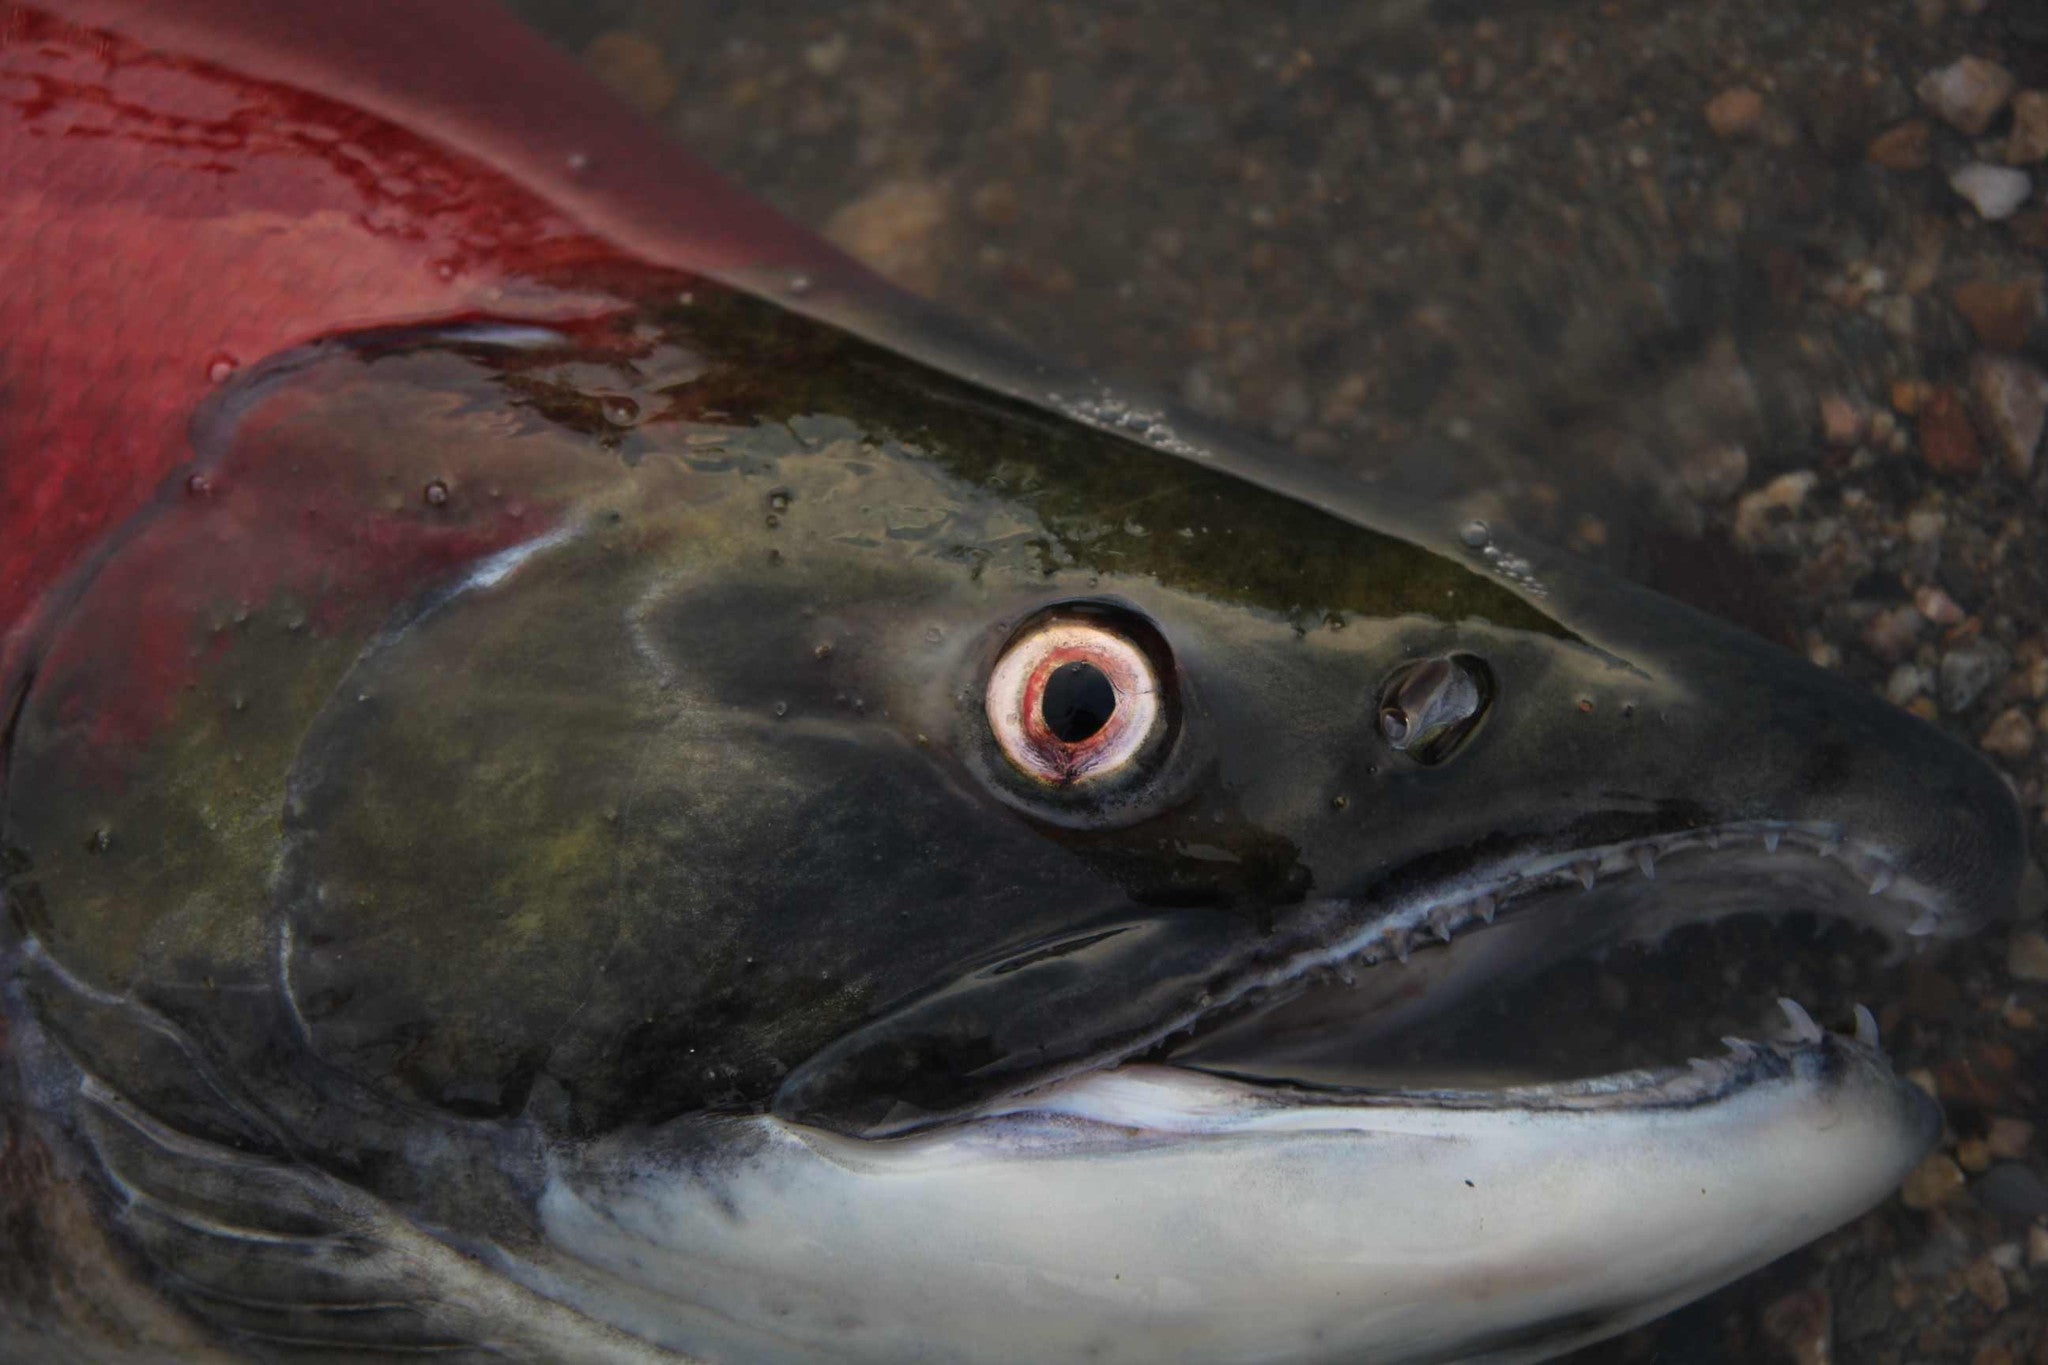 Sockeye salmon from documentary "Salmon Confidential"